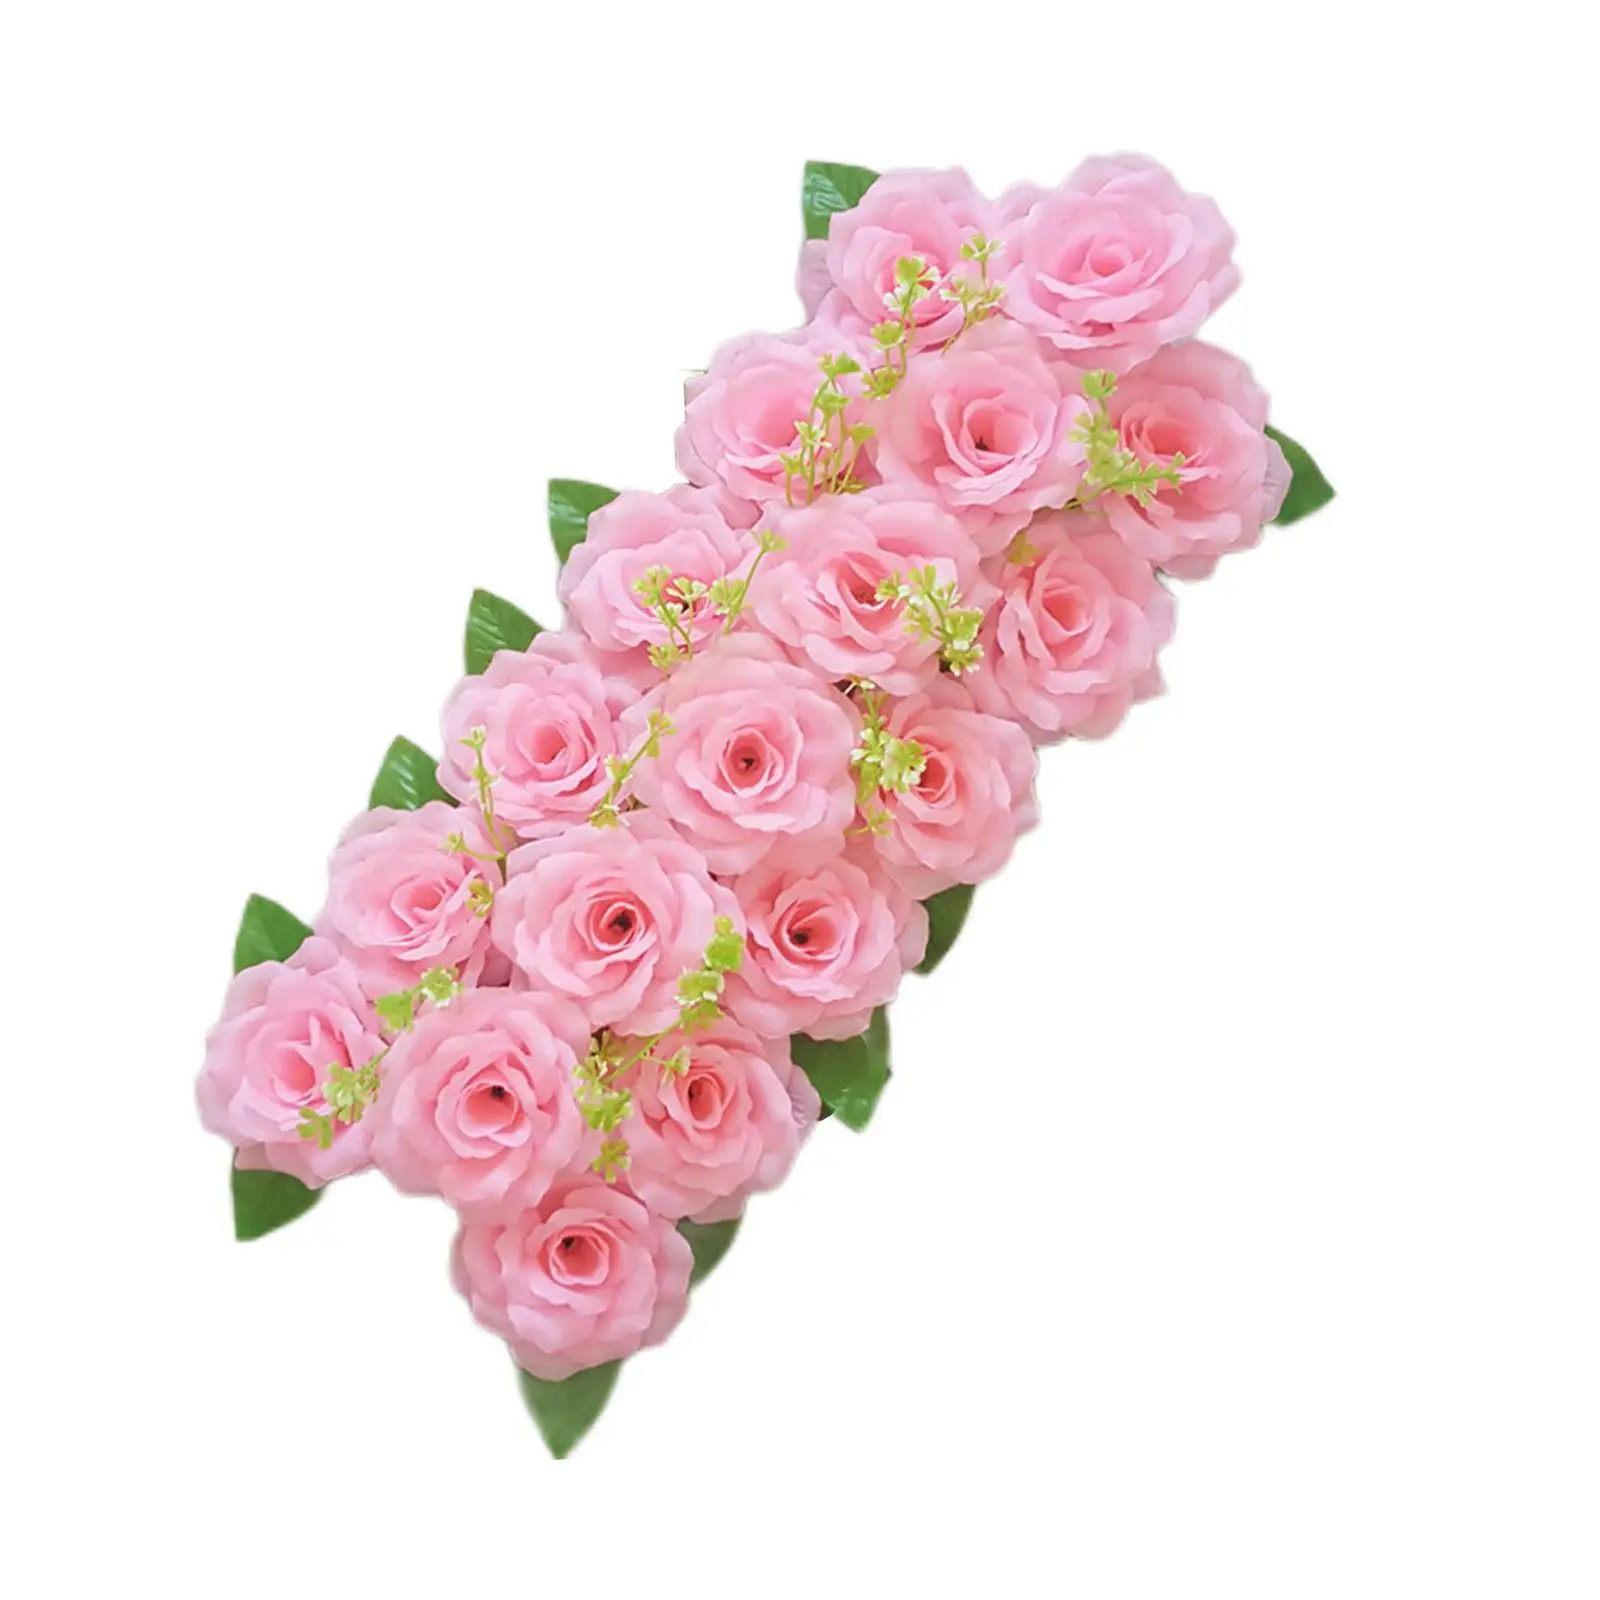 Artificial Rose Flower Panel Road Cited Flowers Flower Arrangements Bouquet for